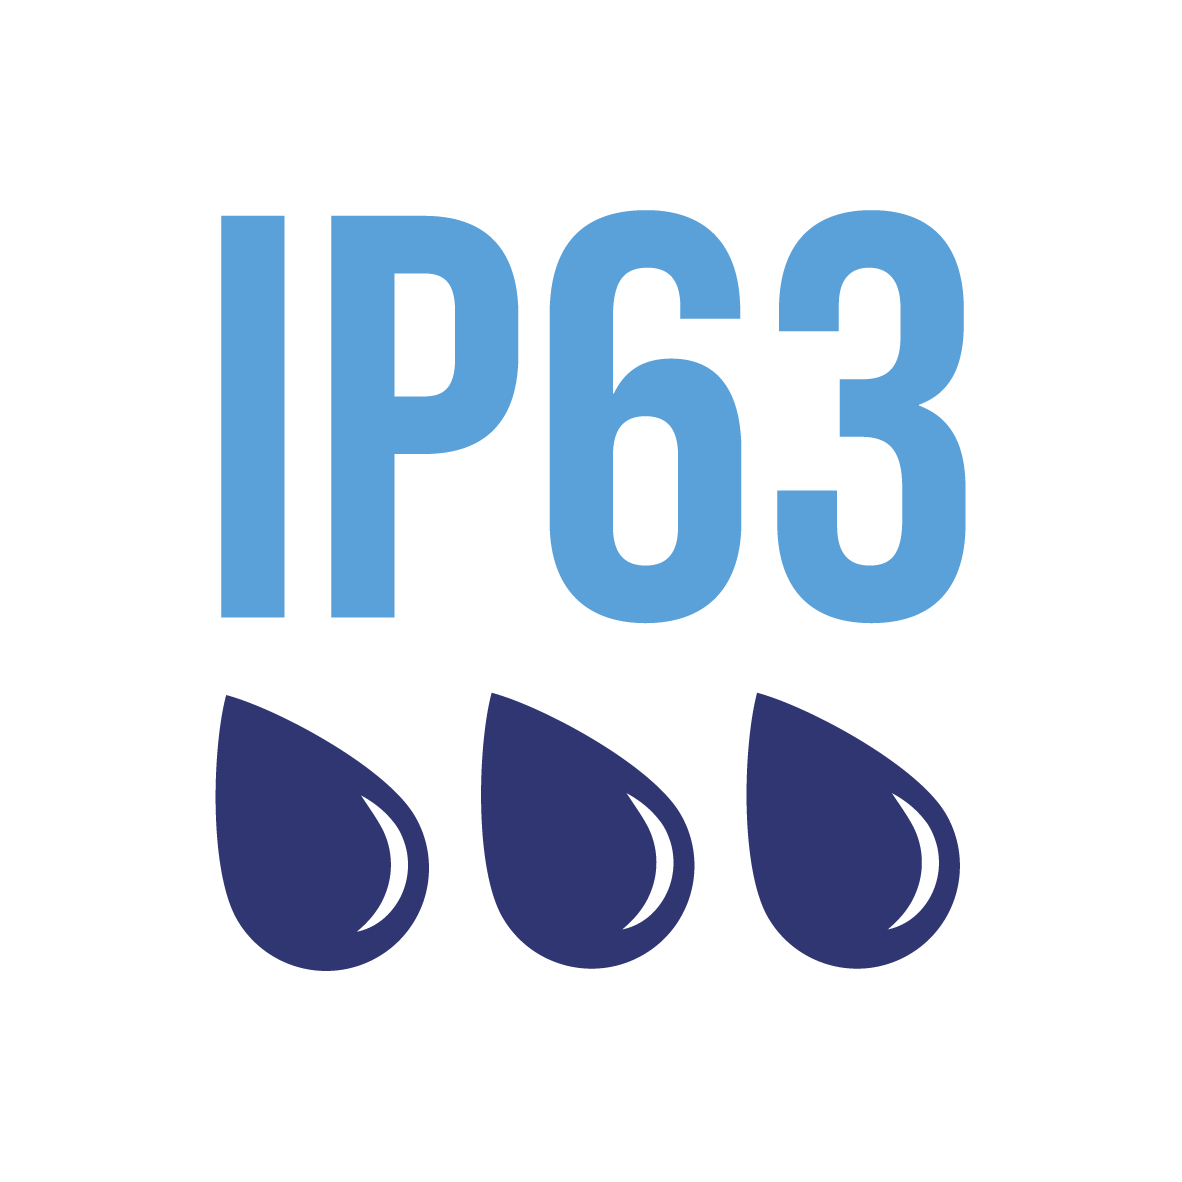 IP63